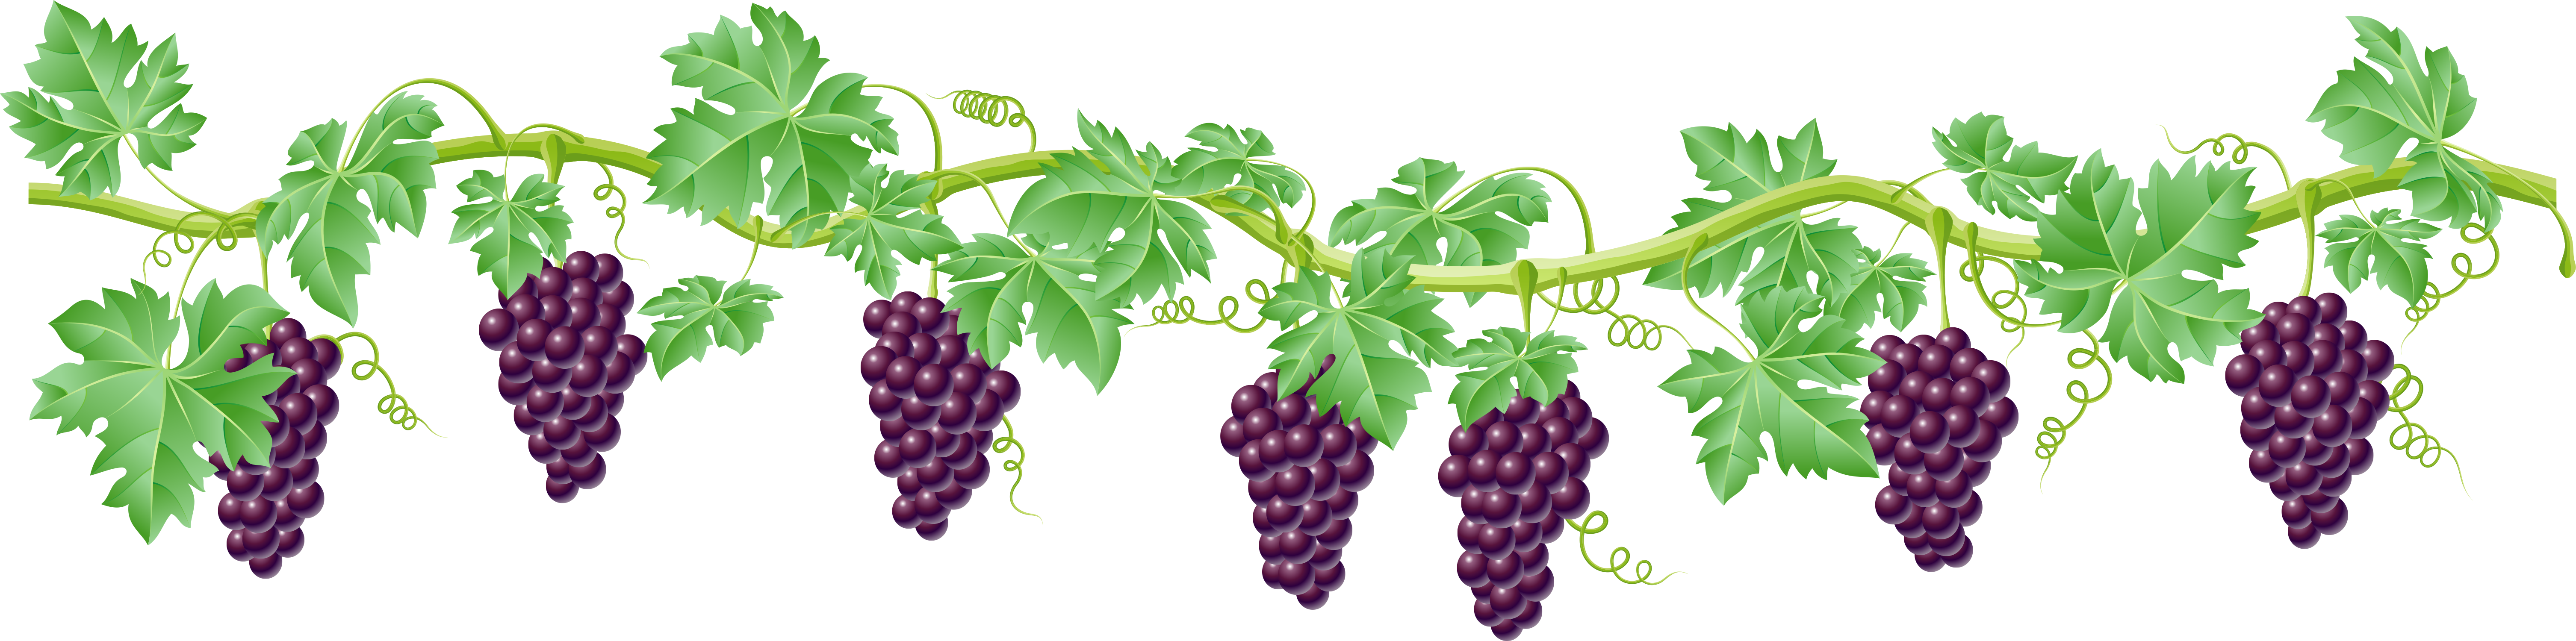 Grape clipart green item. Pin by jadwiga on